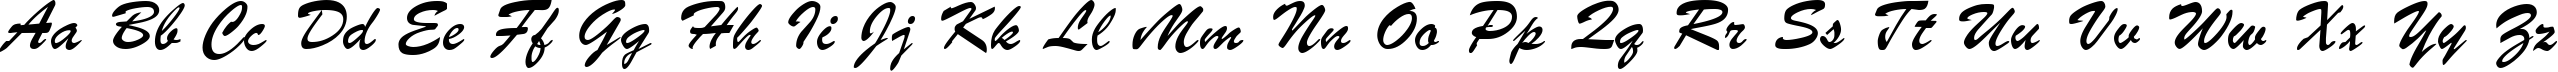 Пример написания английского алфавита шрифтом ParsekCTT